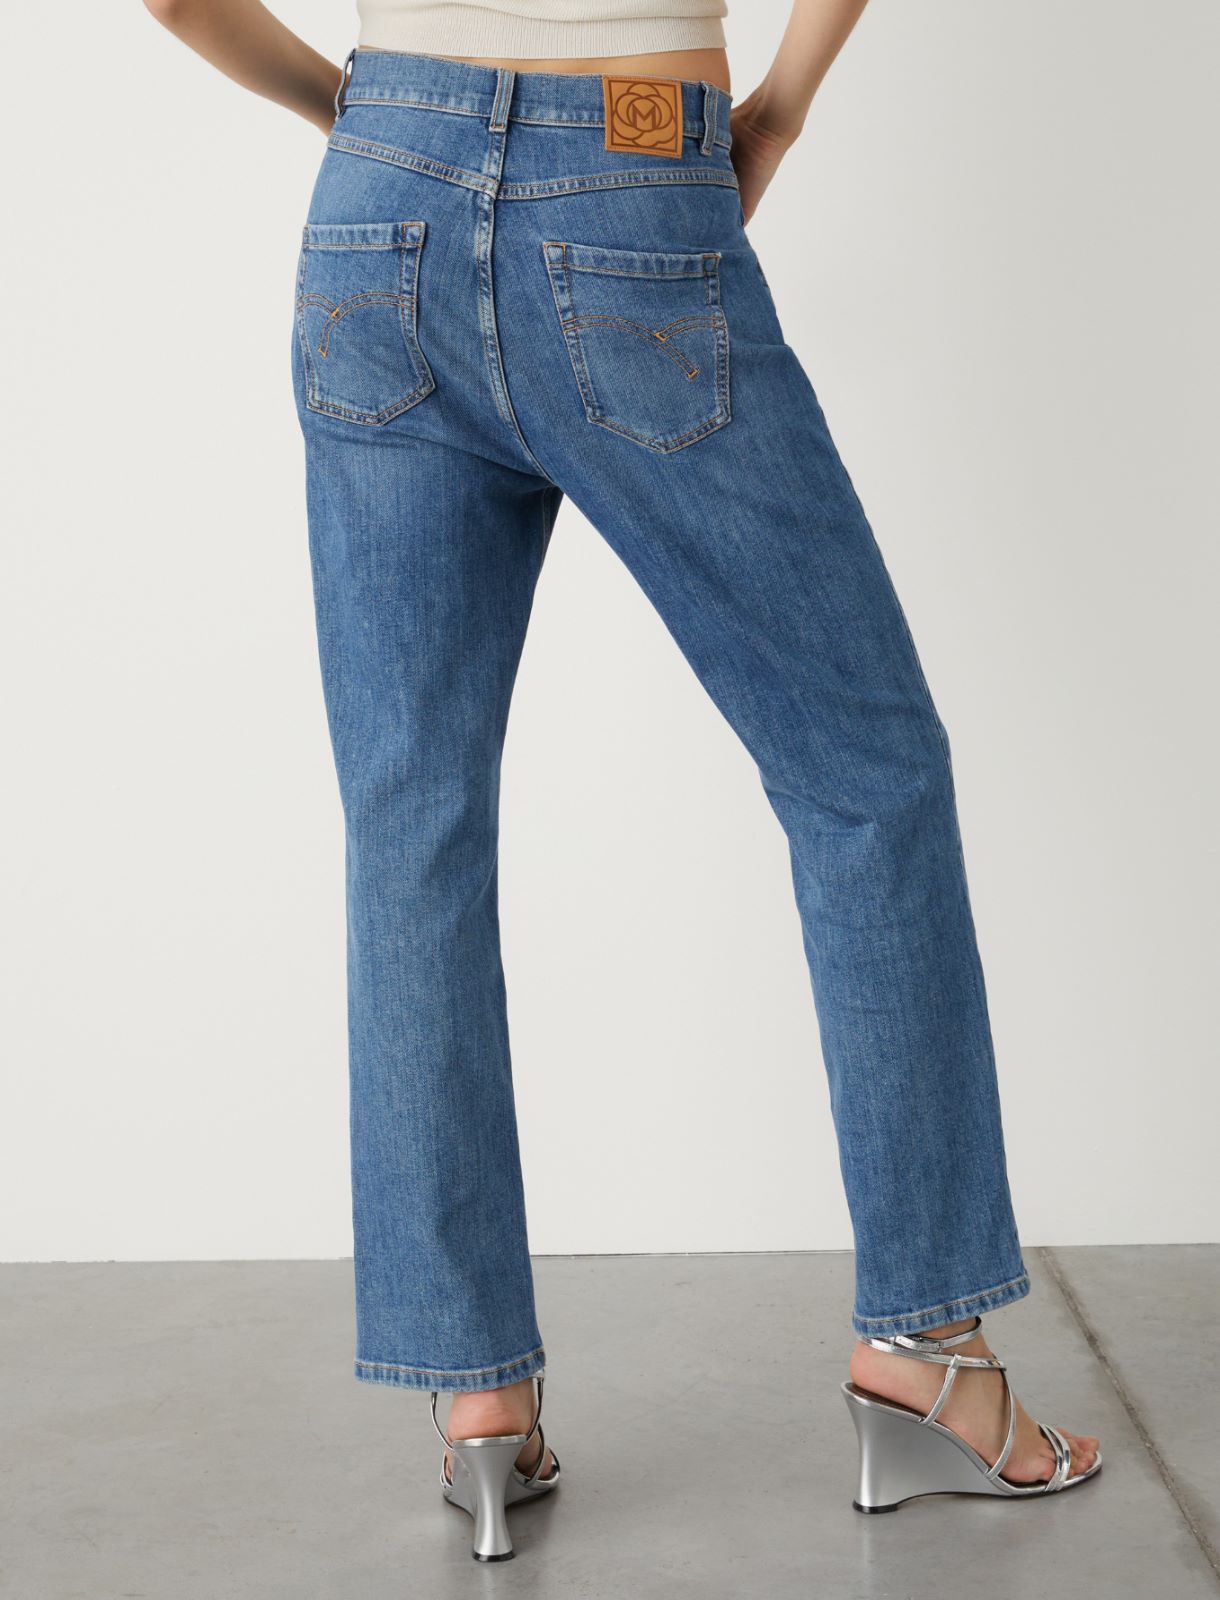 Jean taille haute - Bleu jeans - Marella - 2